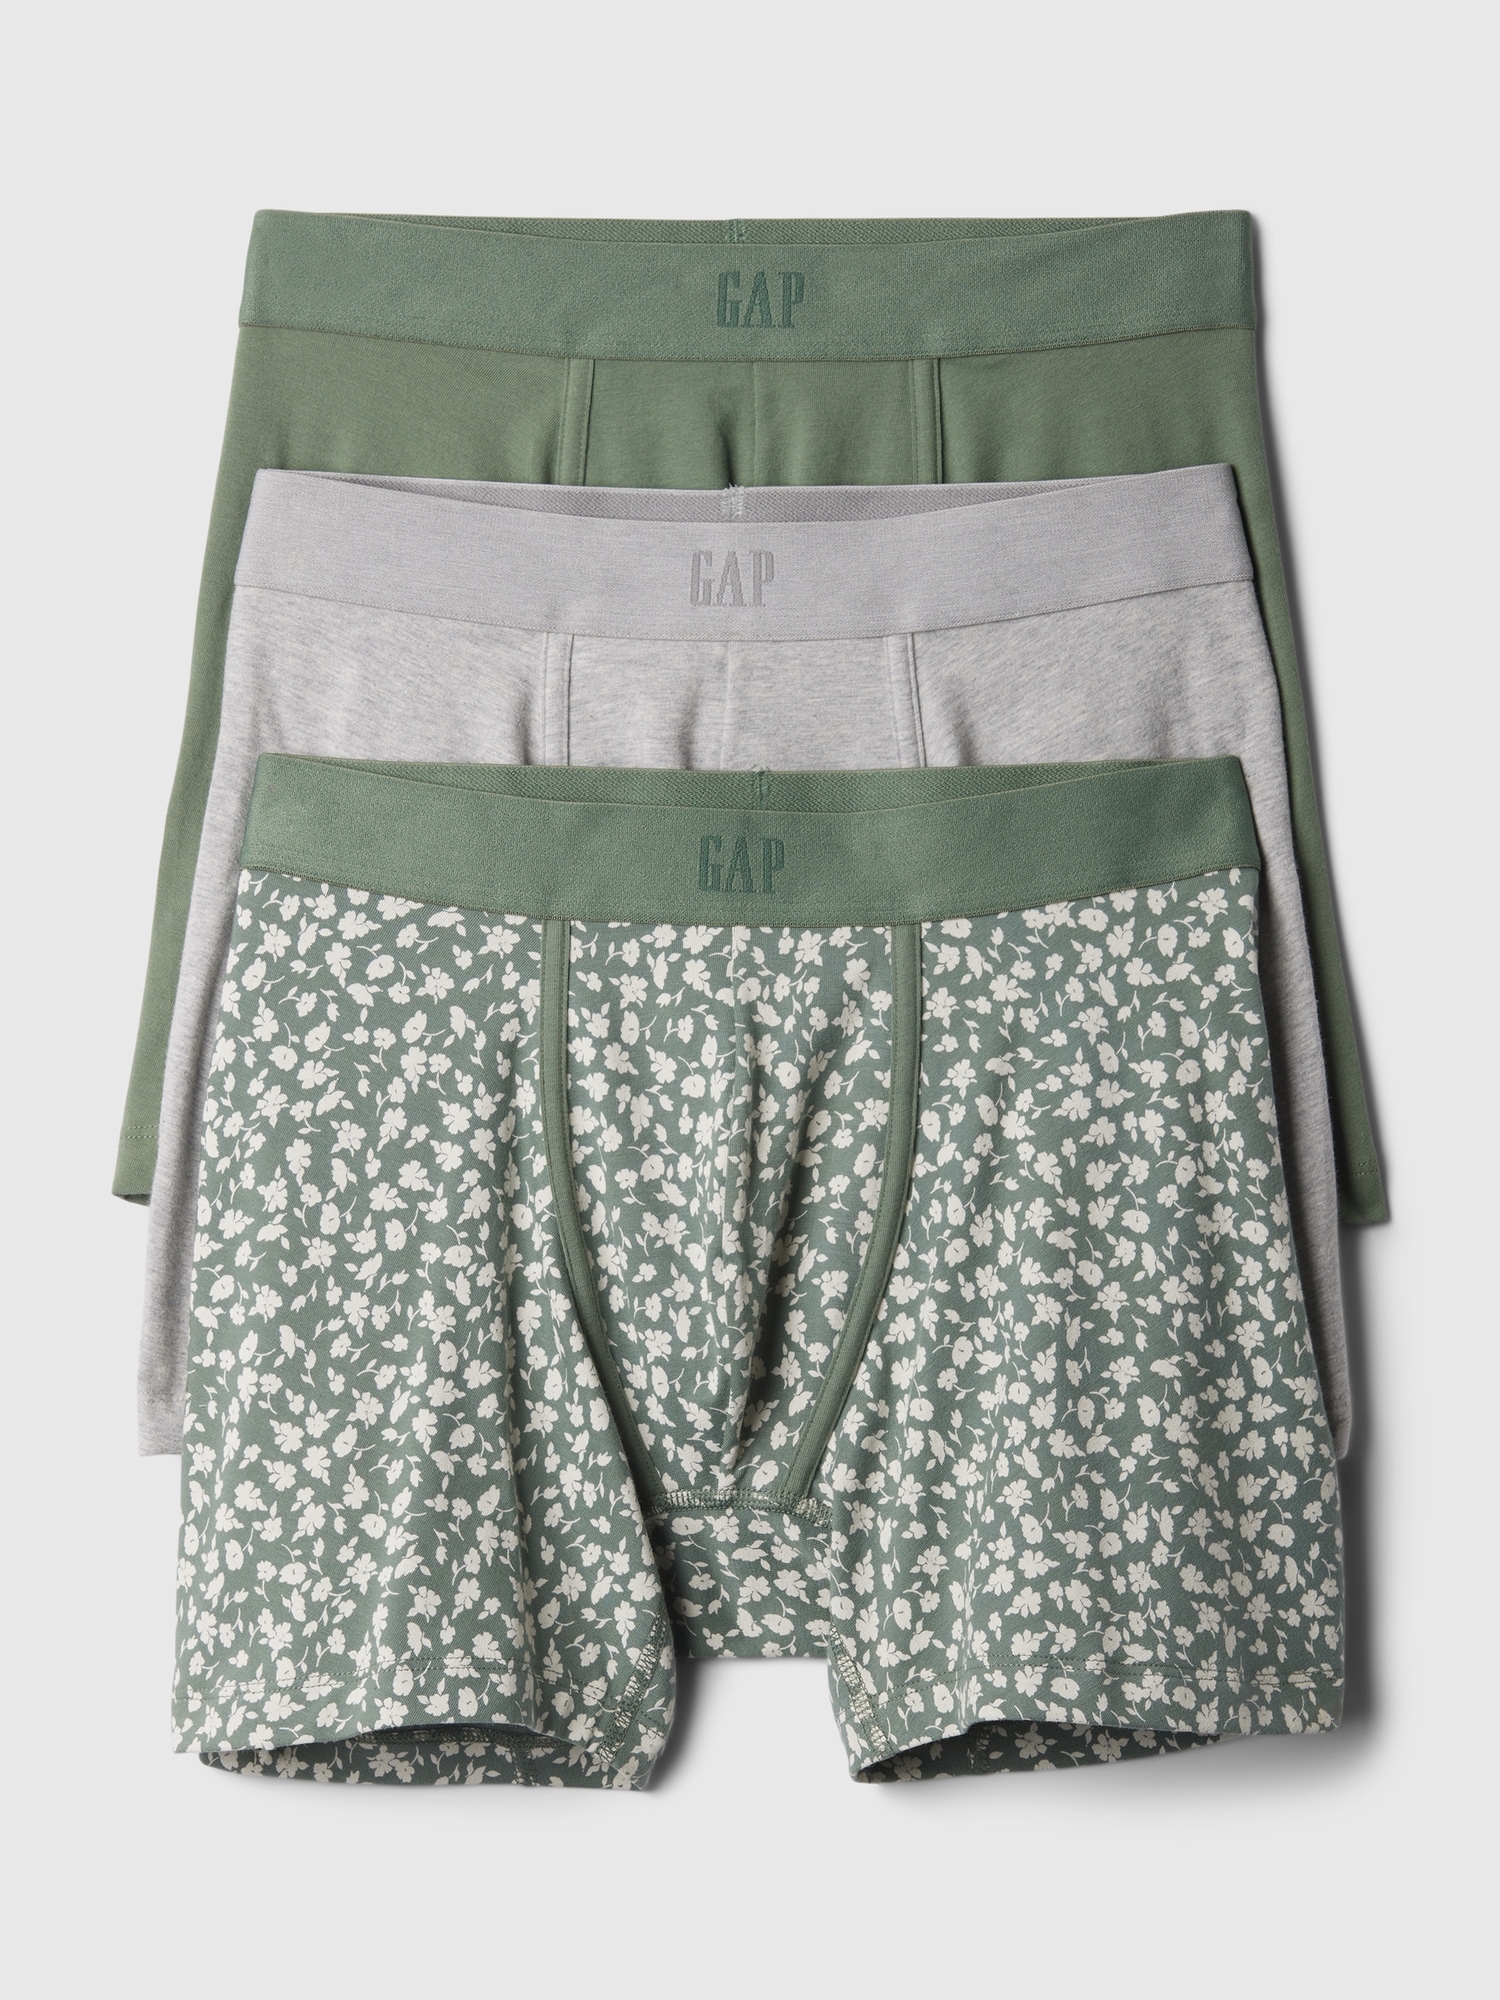 GAP, Underwear & Socks, Gap Cotton Stretch Boxer Briefs Xlarge Mens 3  Pack Xl 384 Multicolor New